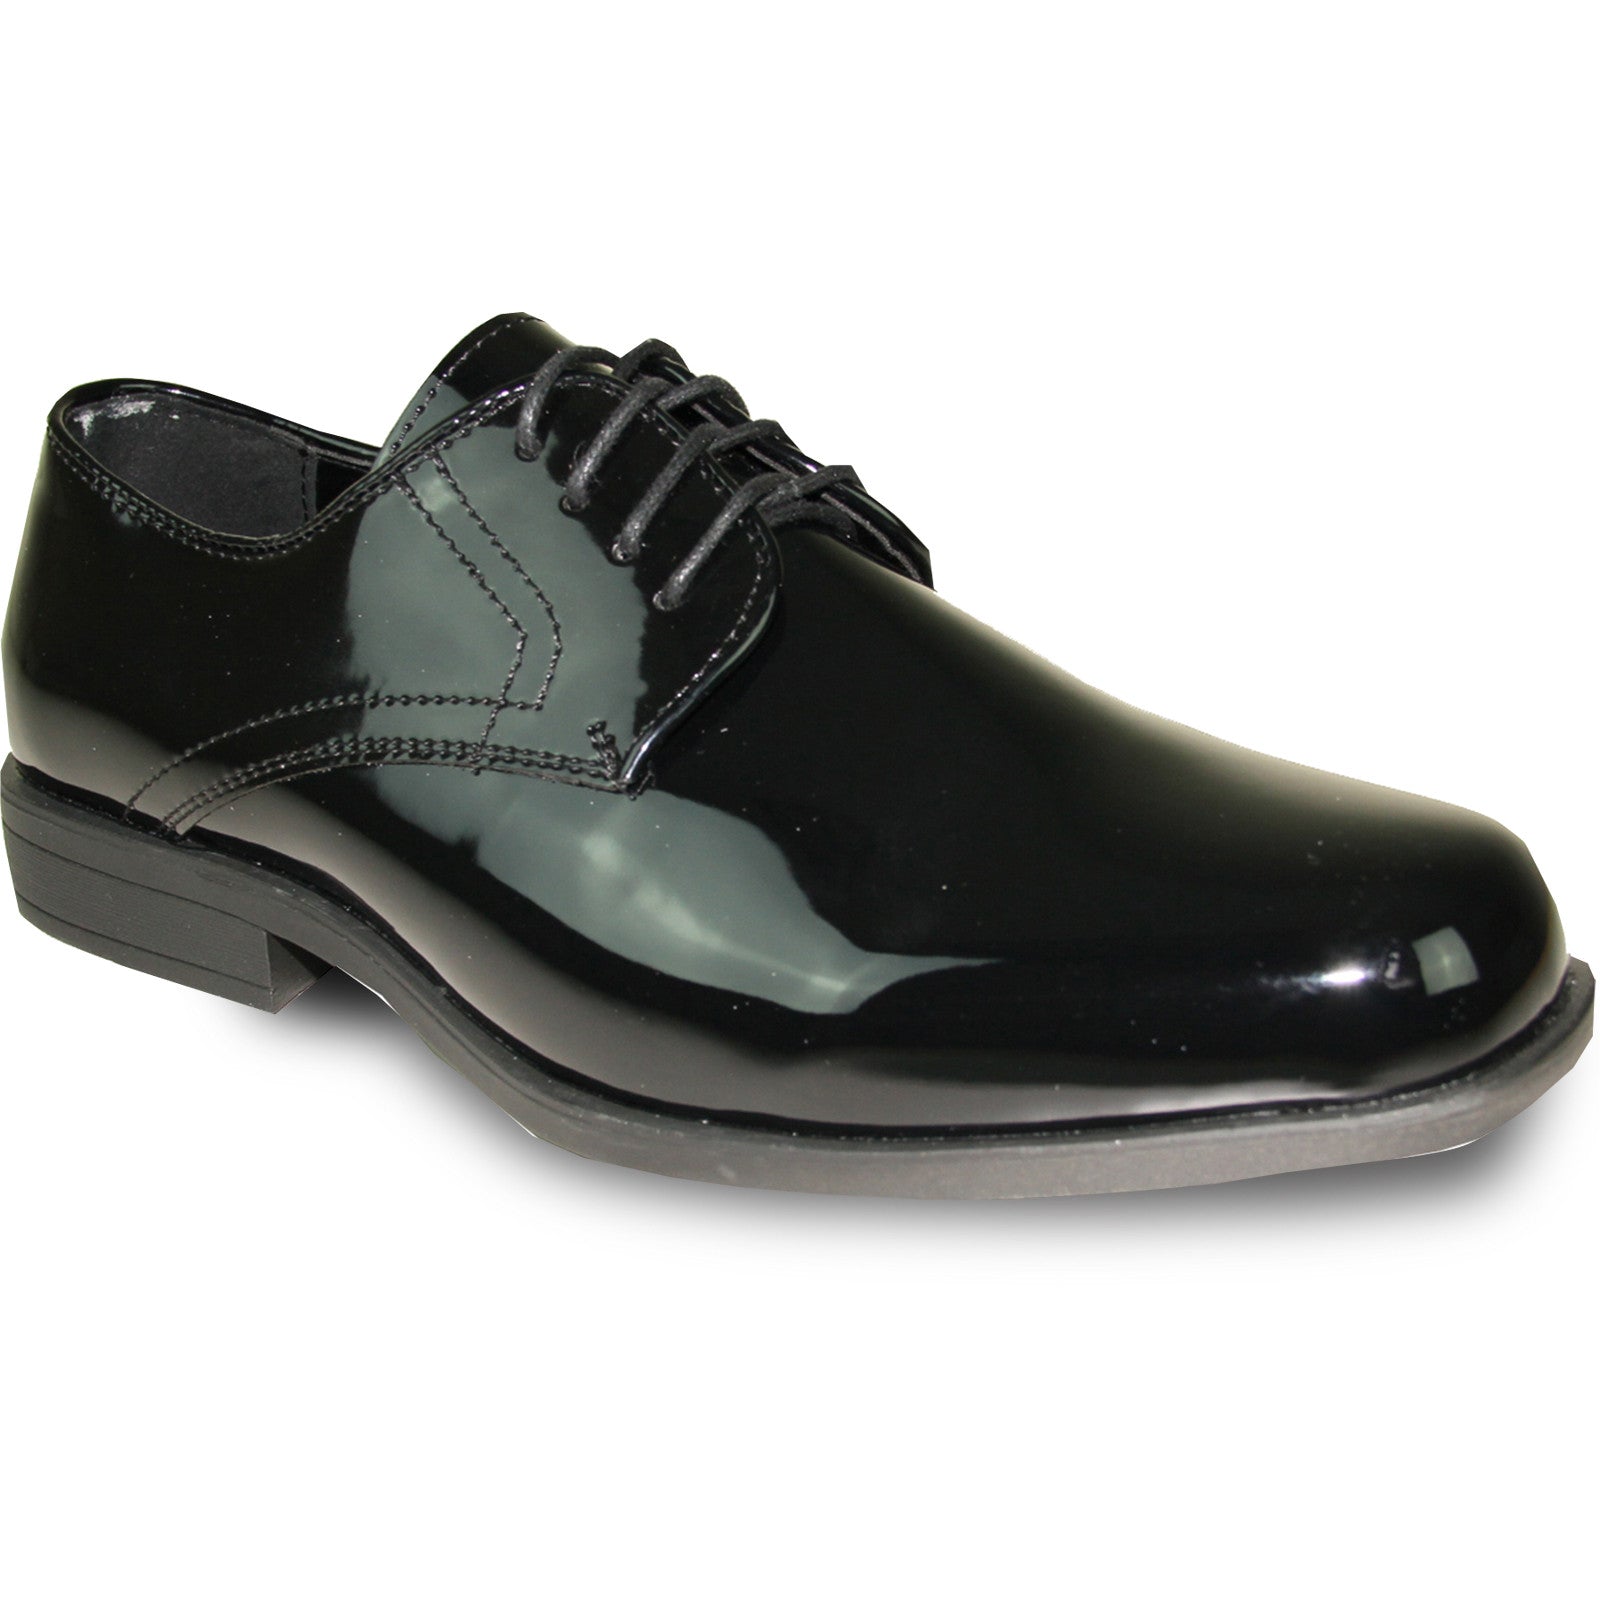 "Black Patent Classic Men's Tuxedo Shoe - Formal Elegance"